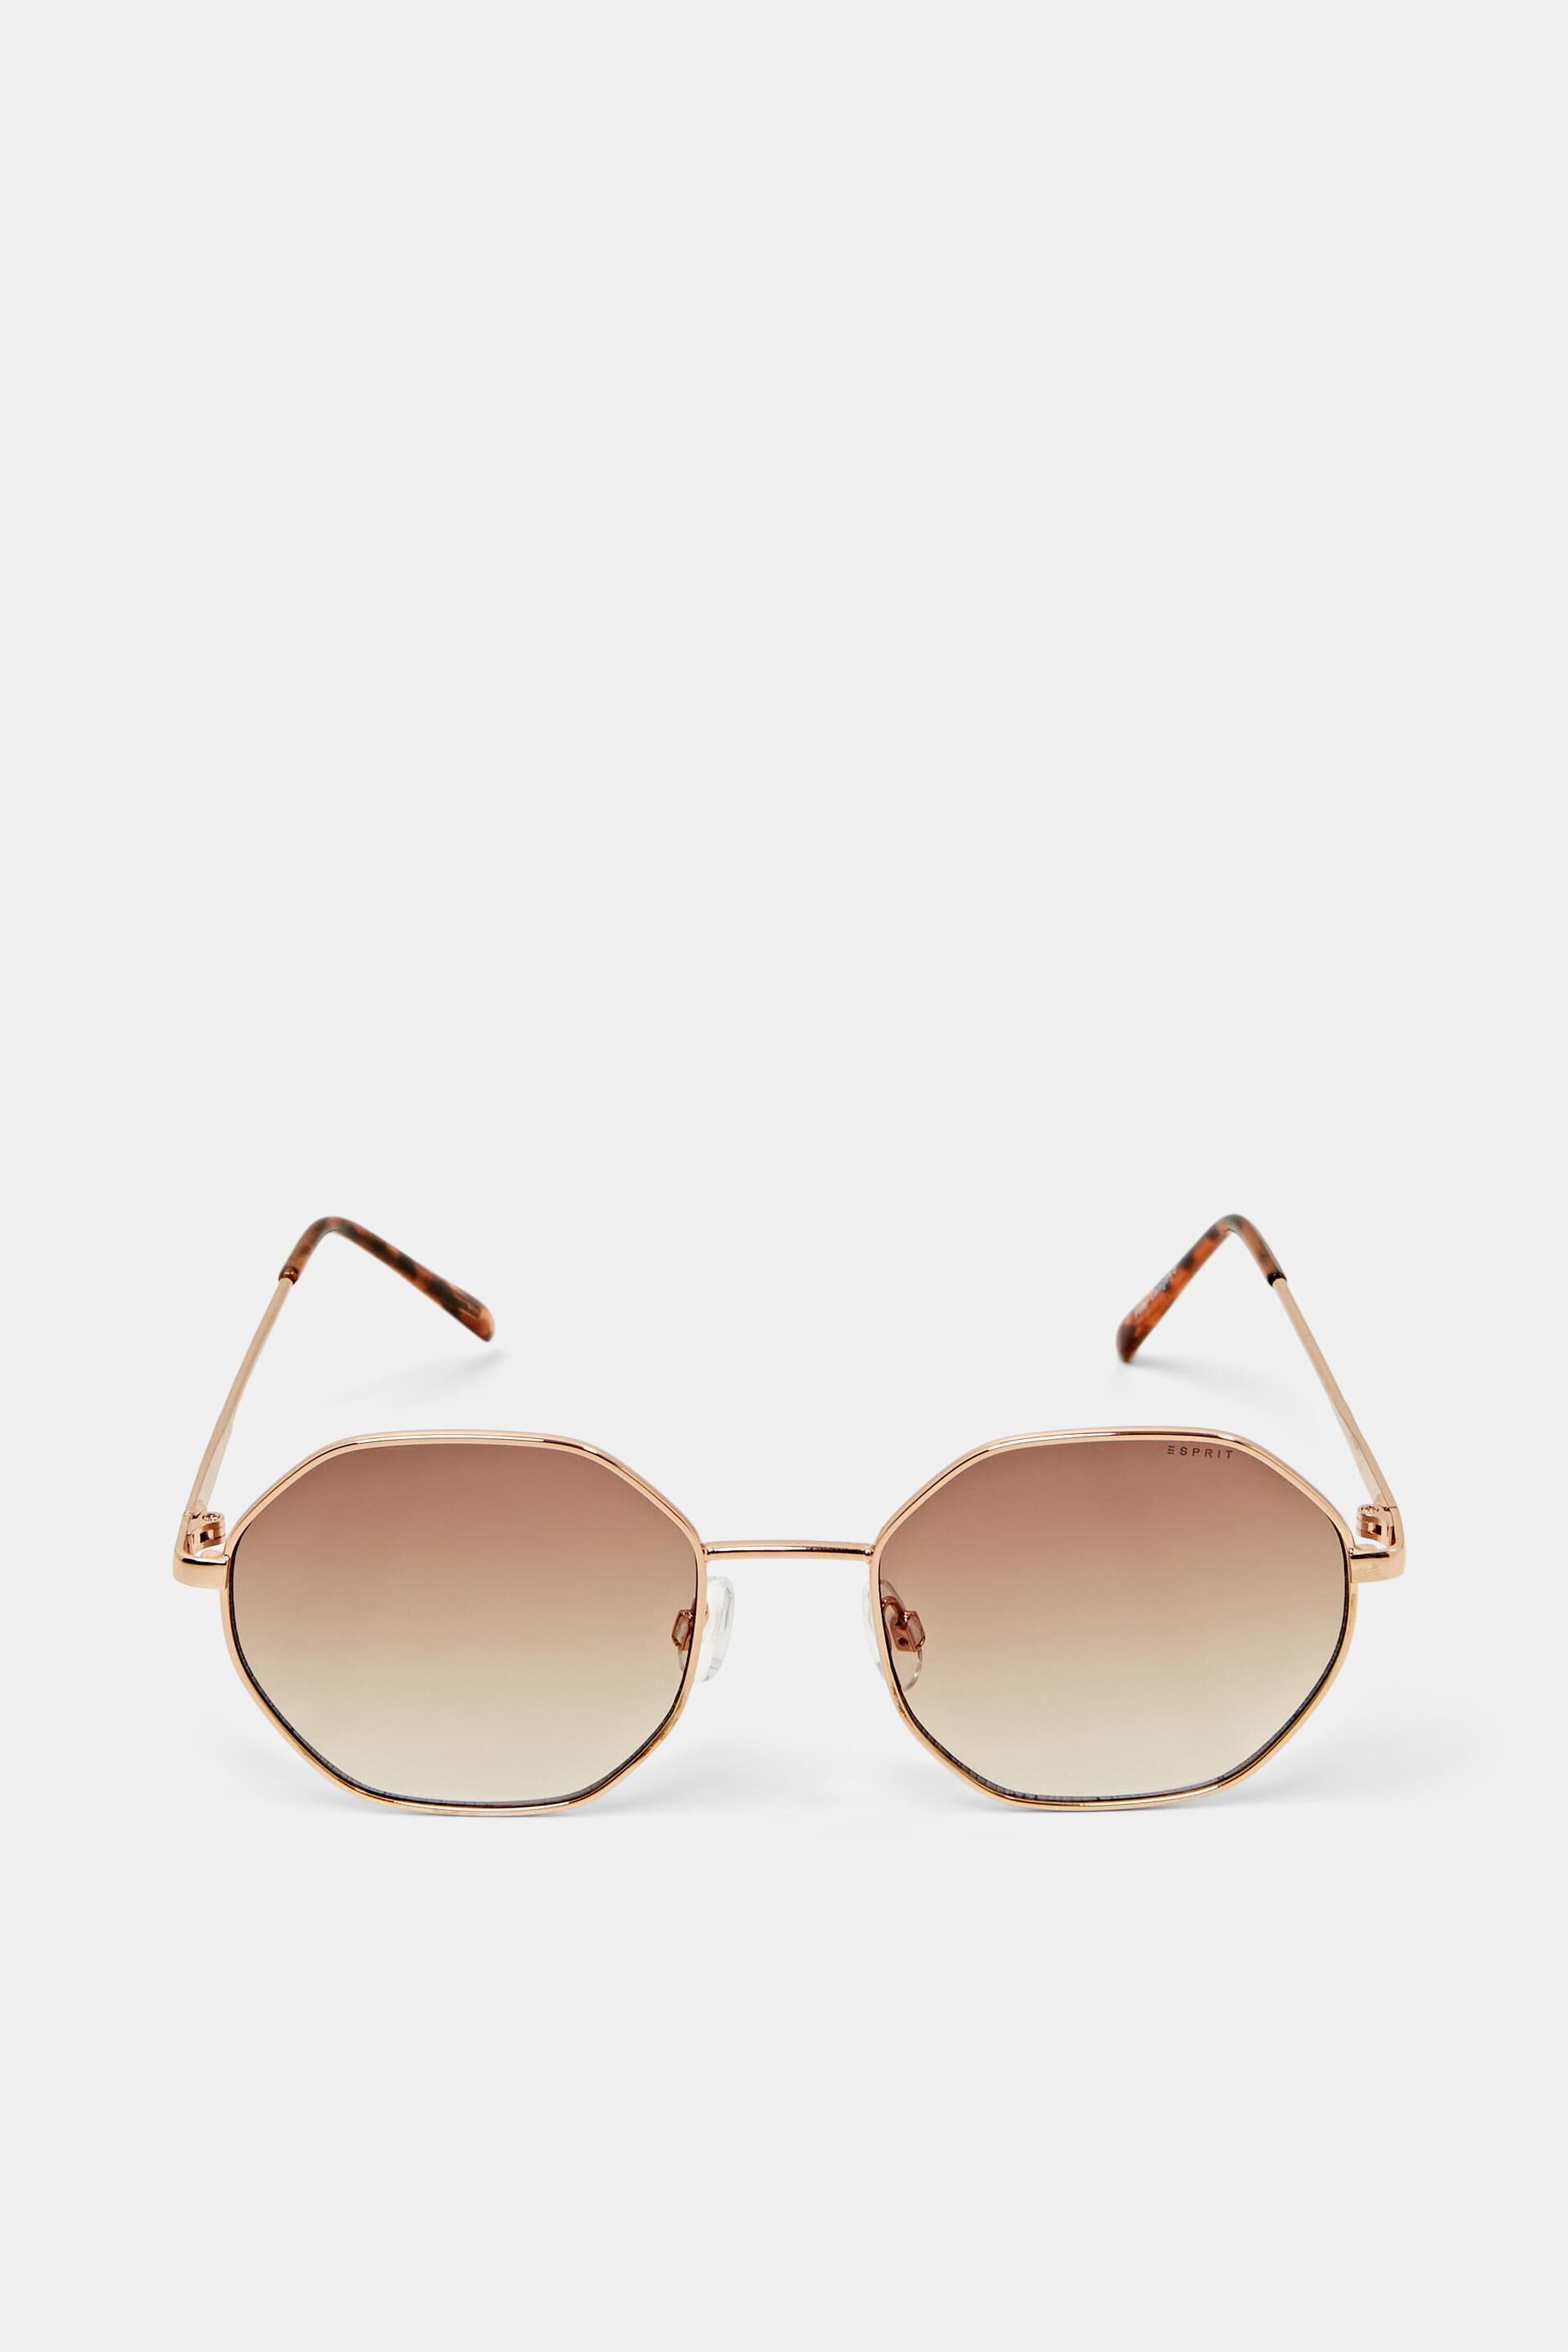 Esprit filigree with Sunglasses frame metal gold